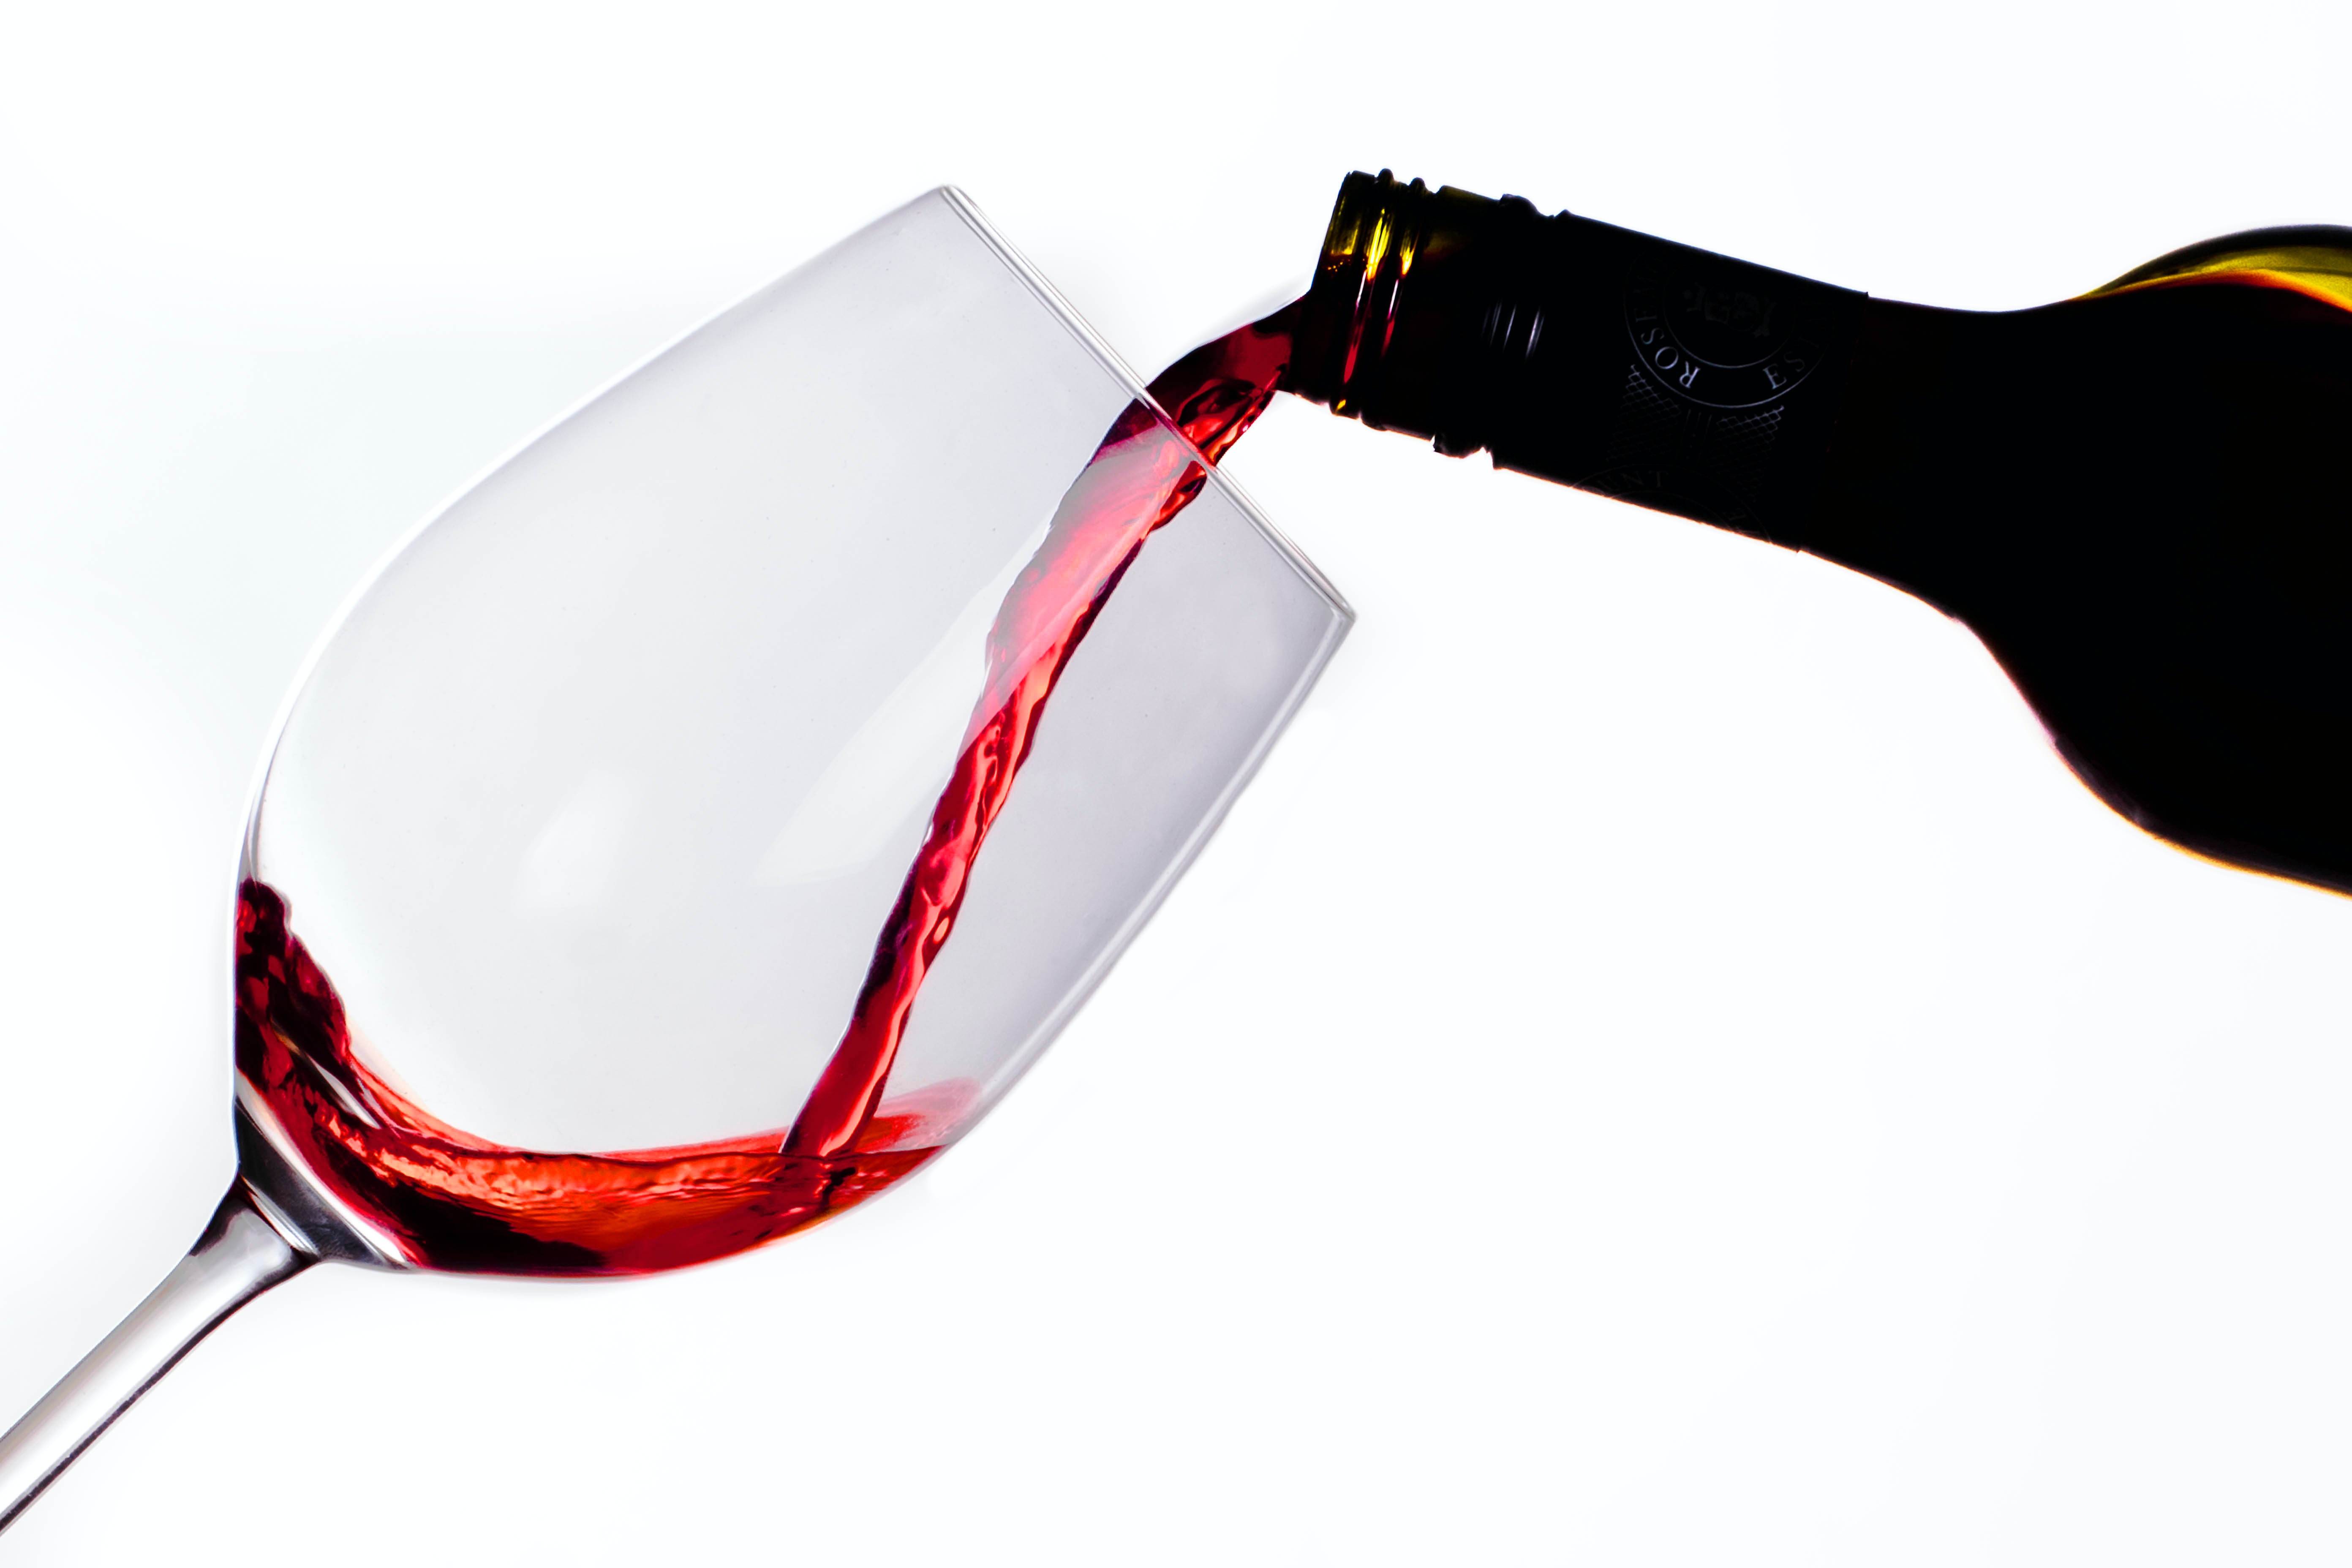 Botella sirviendo vino tinto en copa